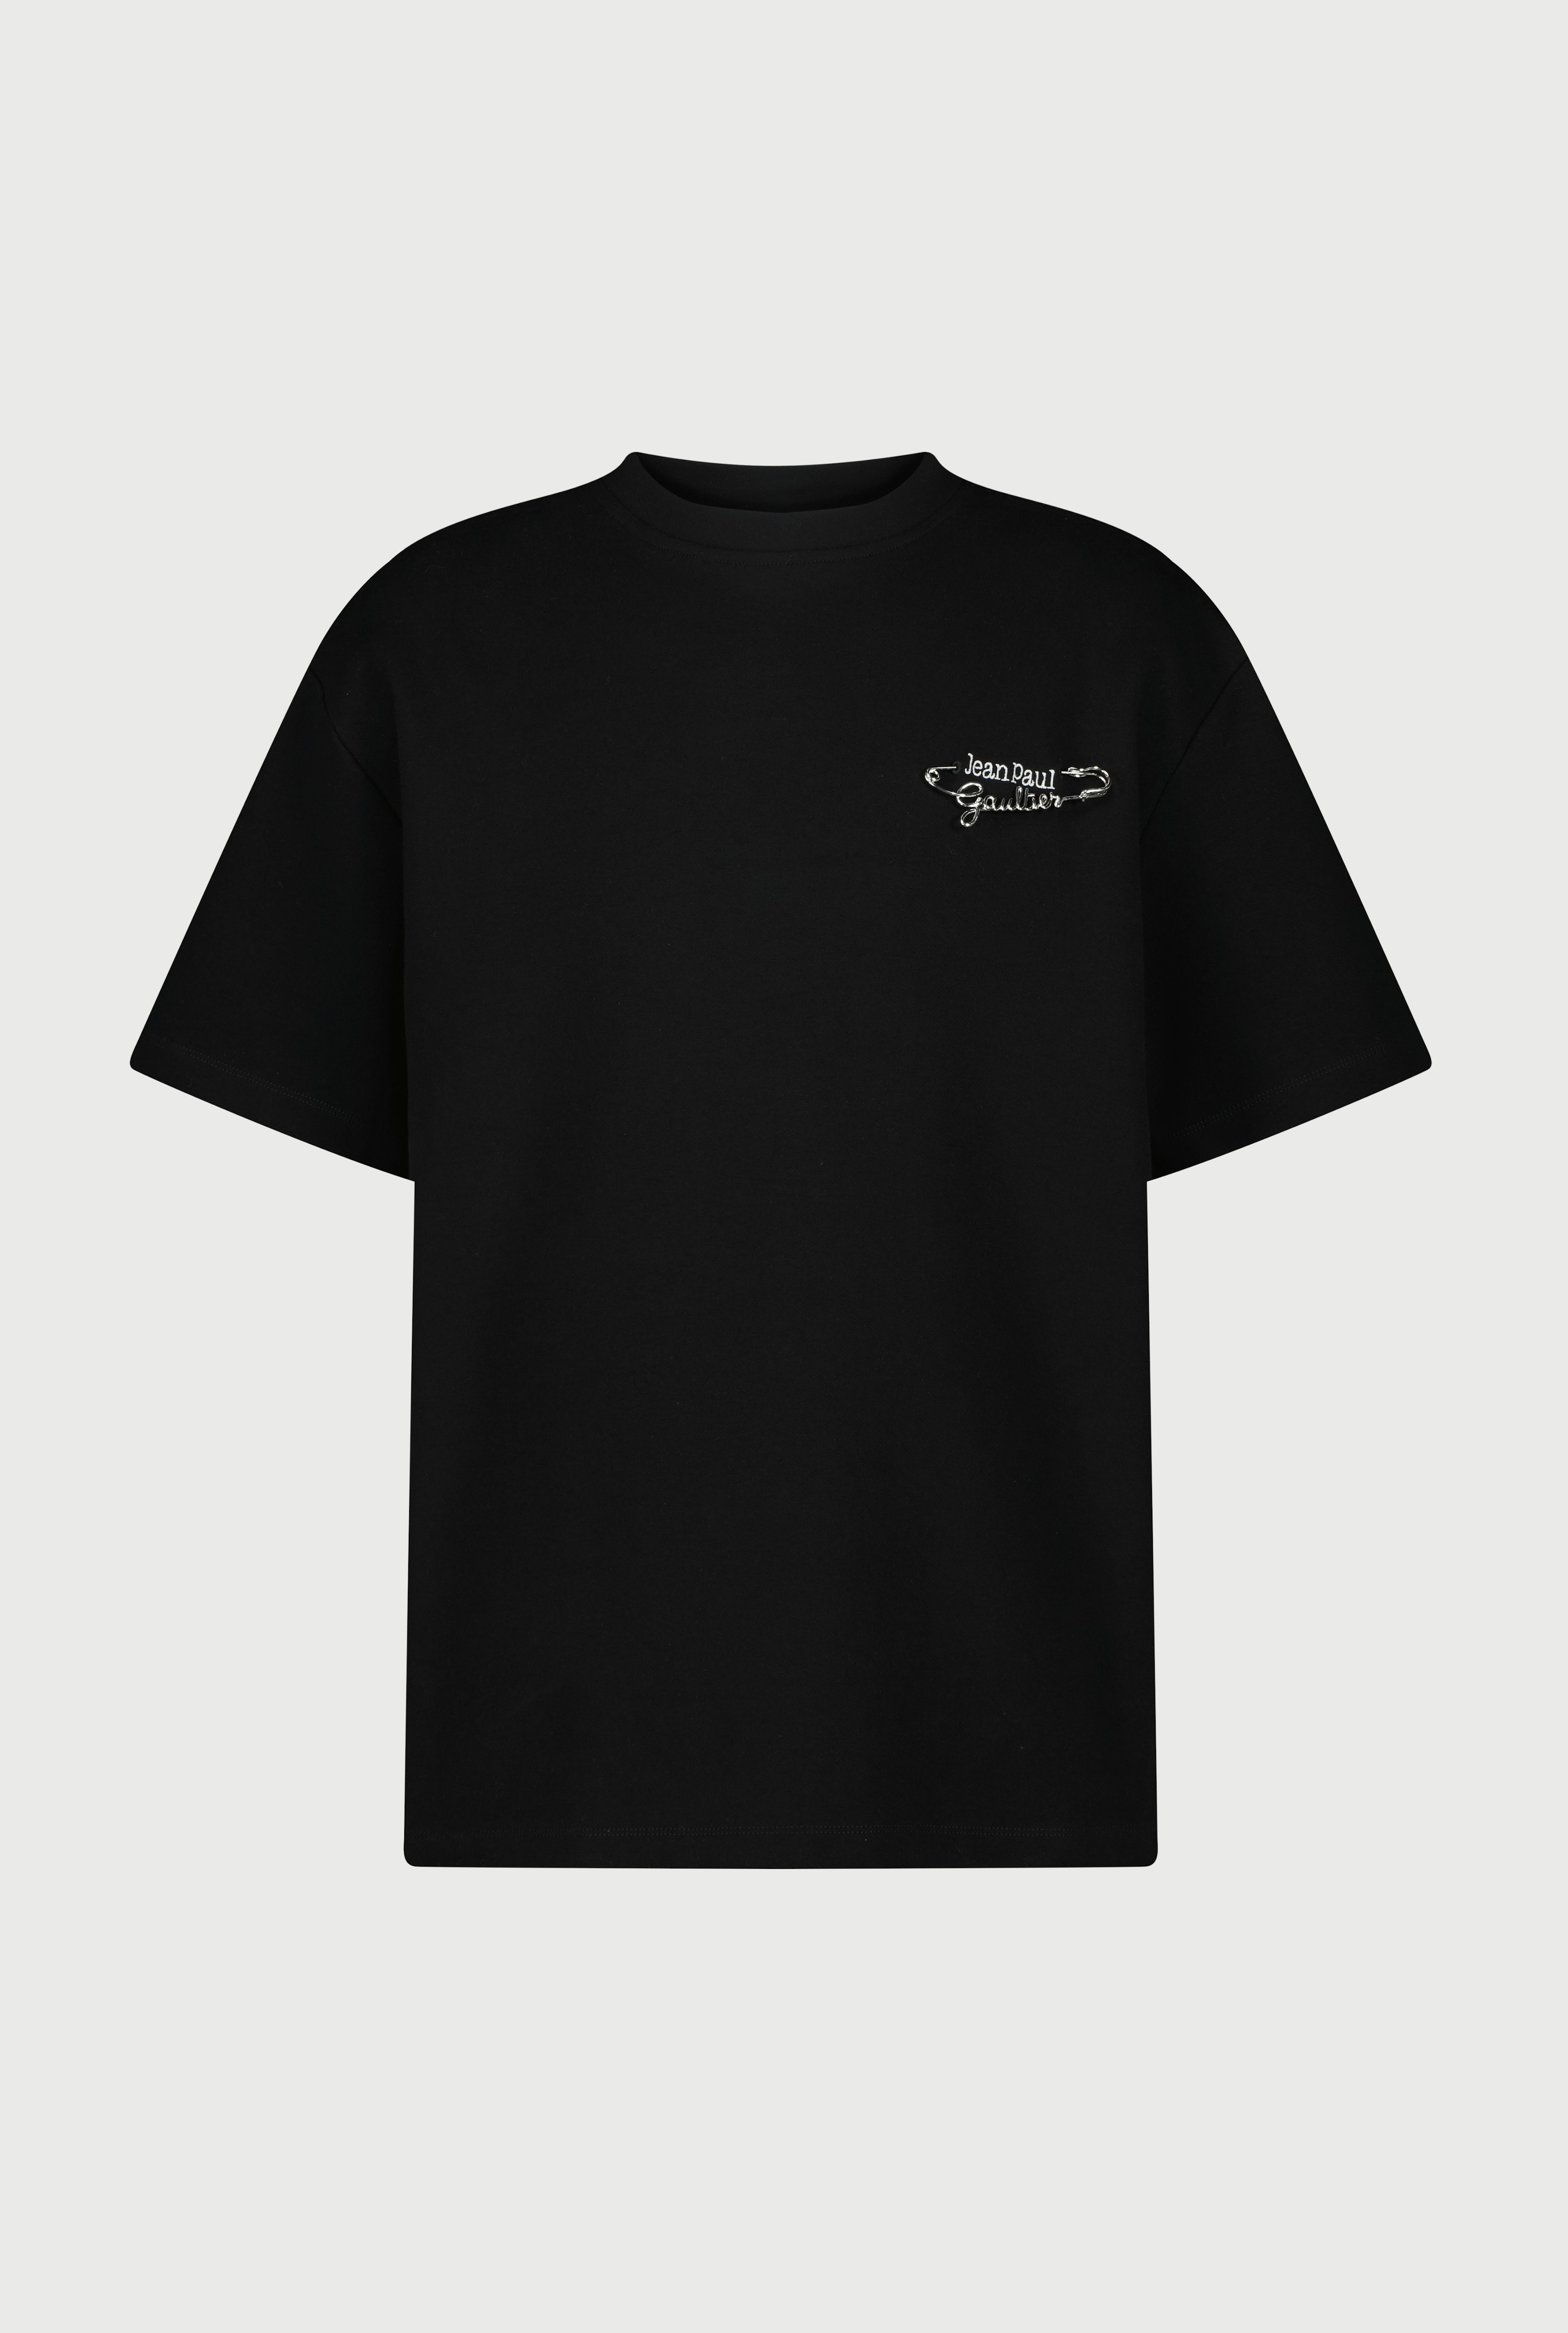 The Black Brooch T-Shirt